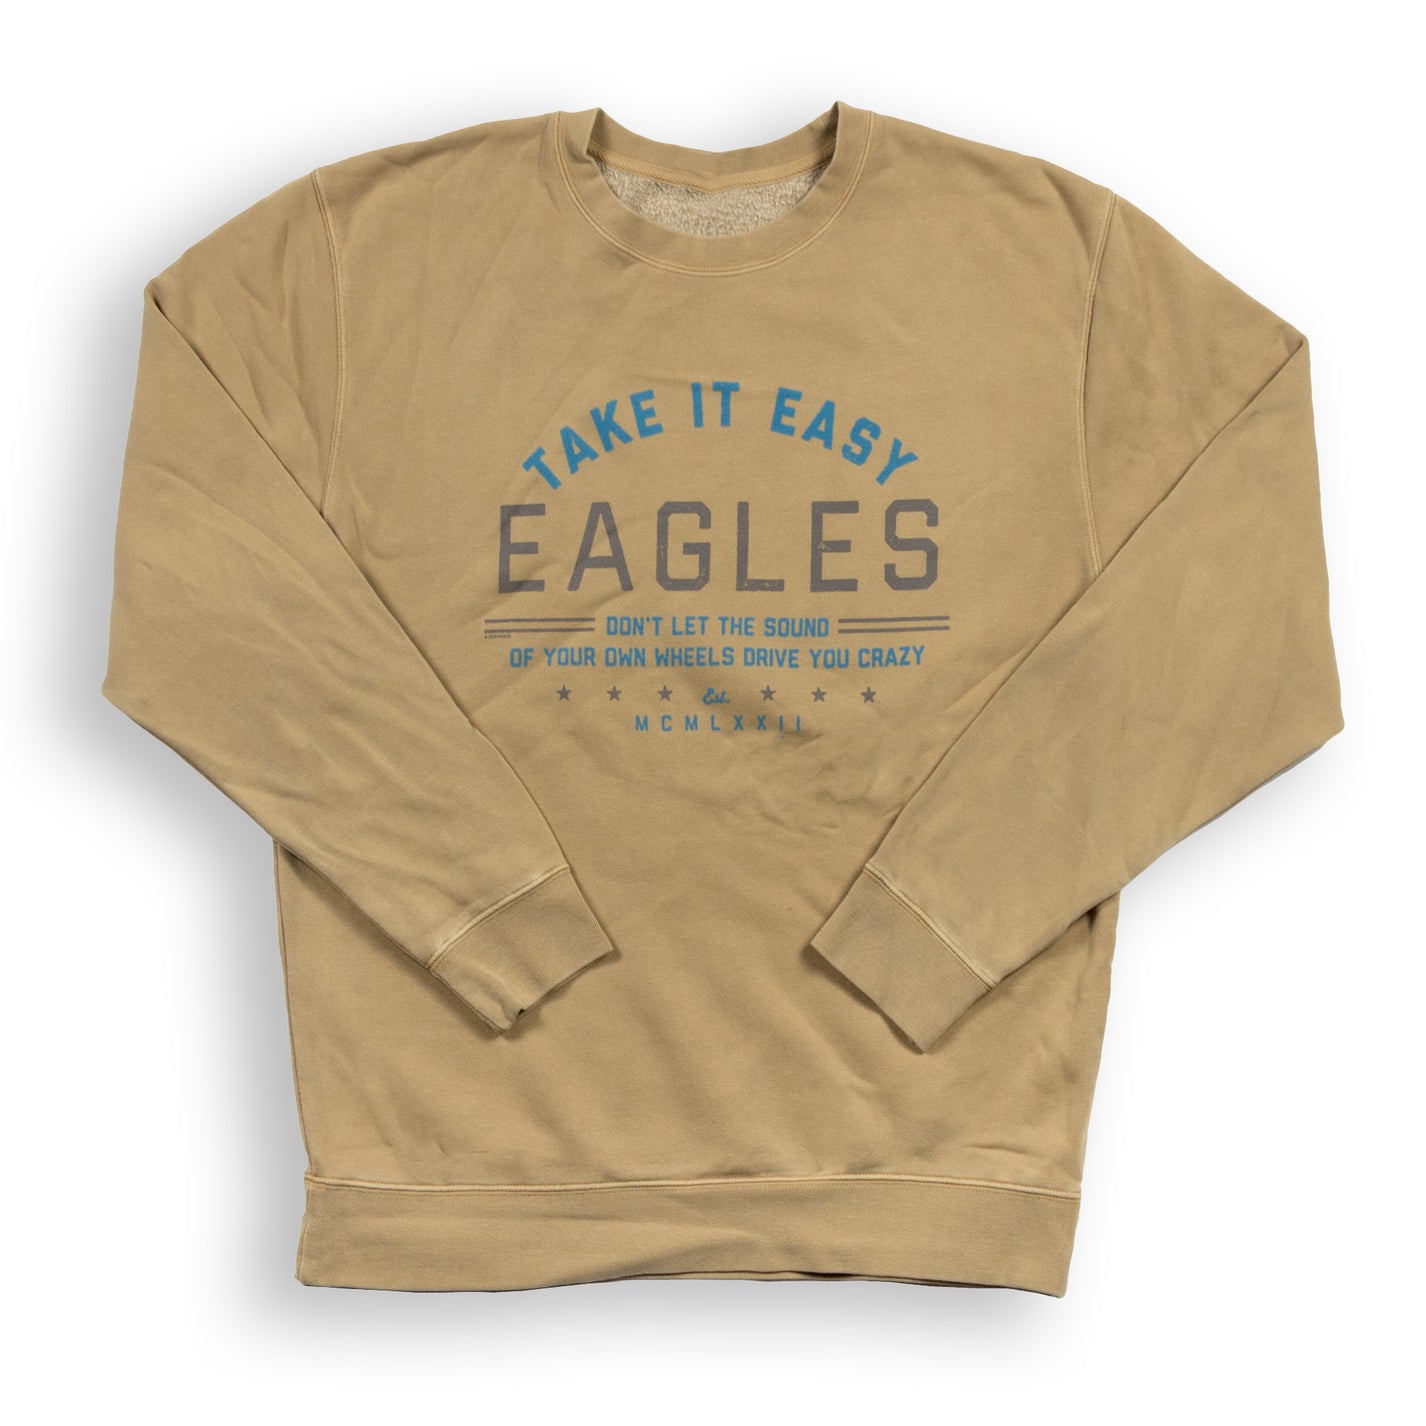 Take It Easy Crew Neck Sweatshirt – Eagles